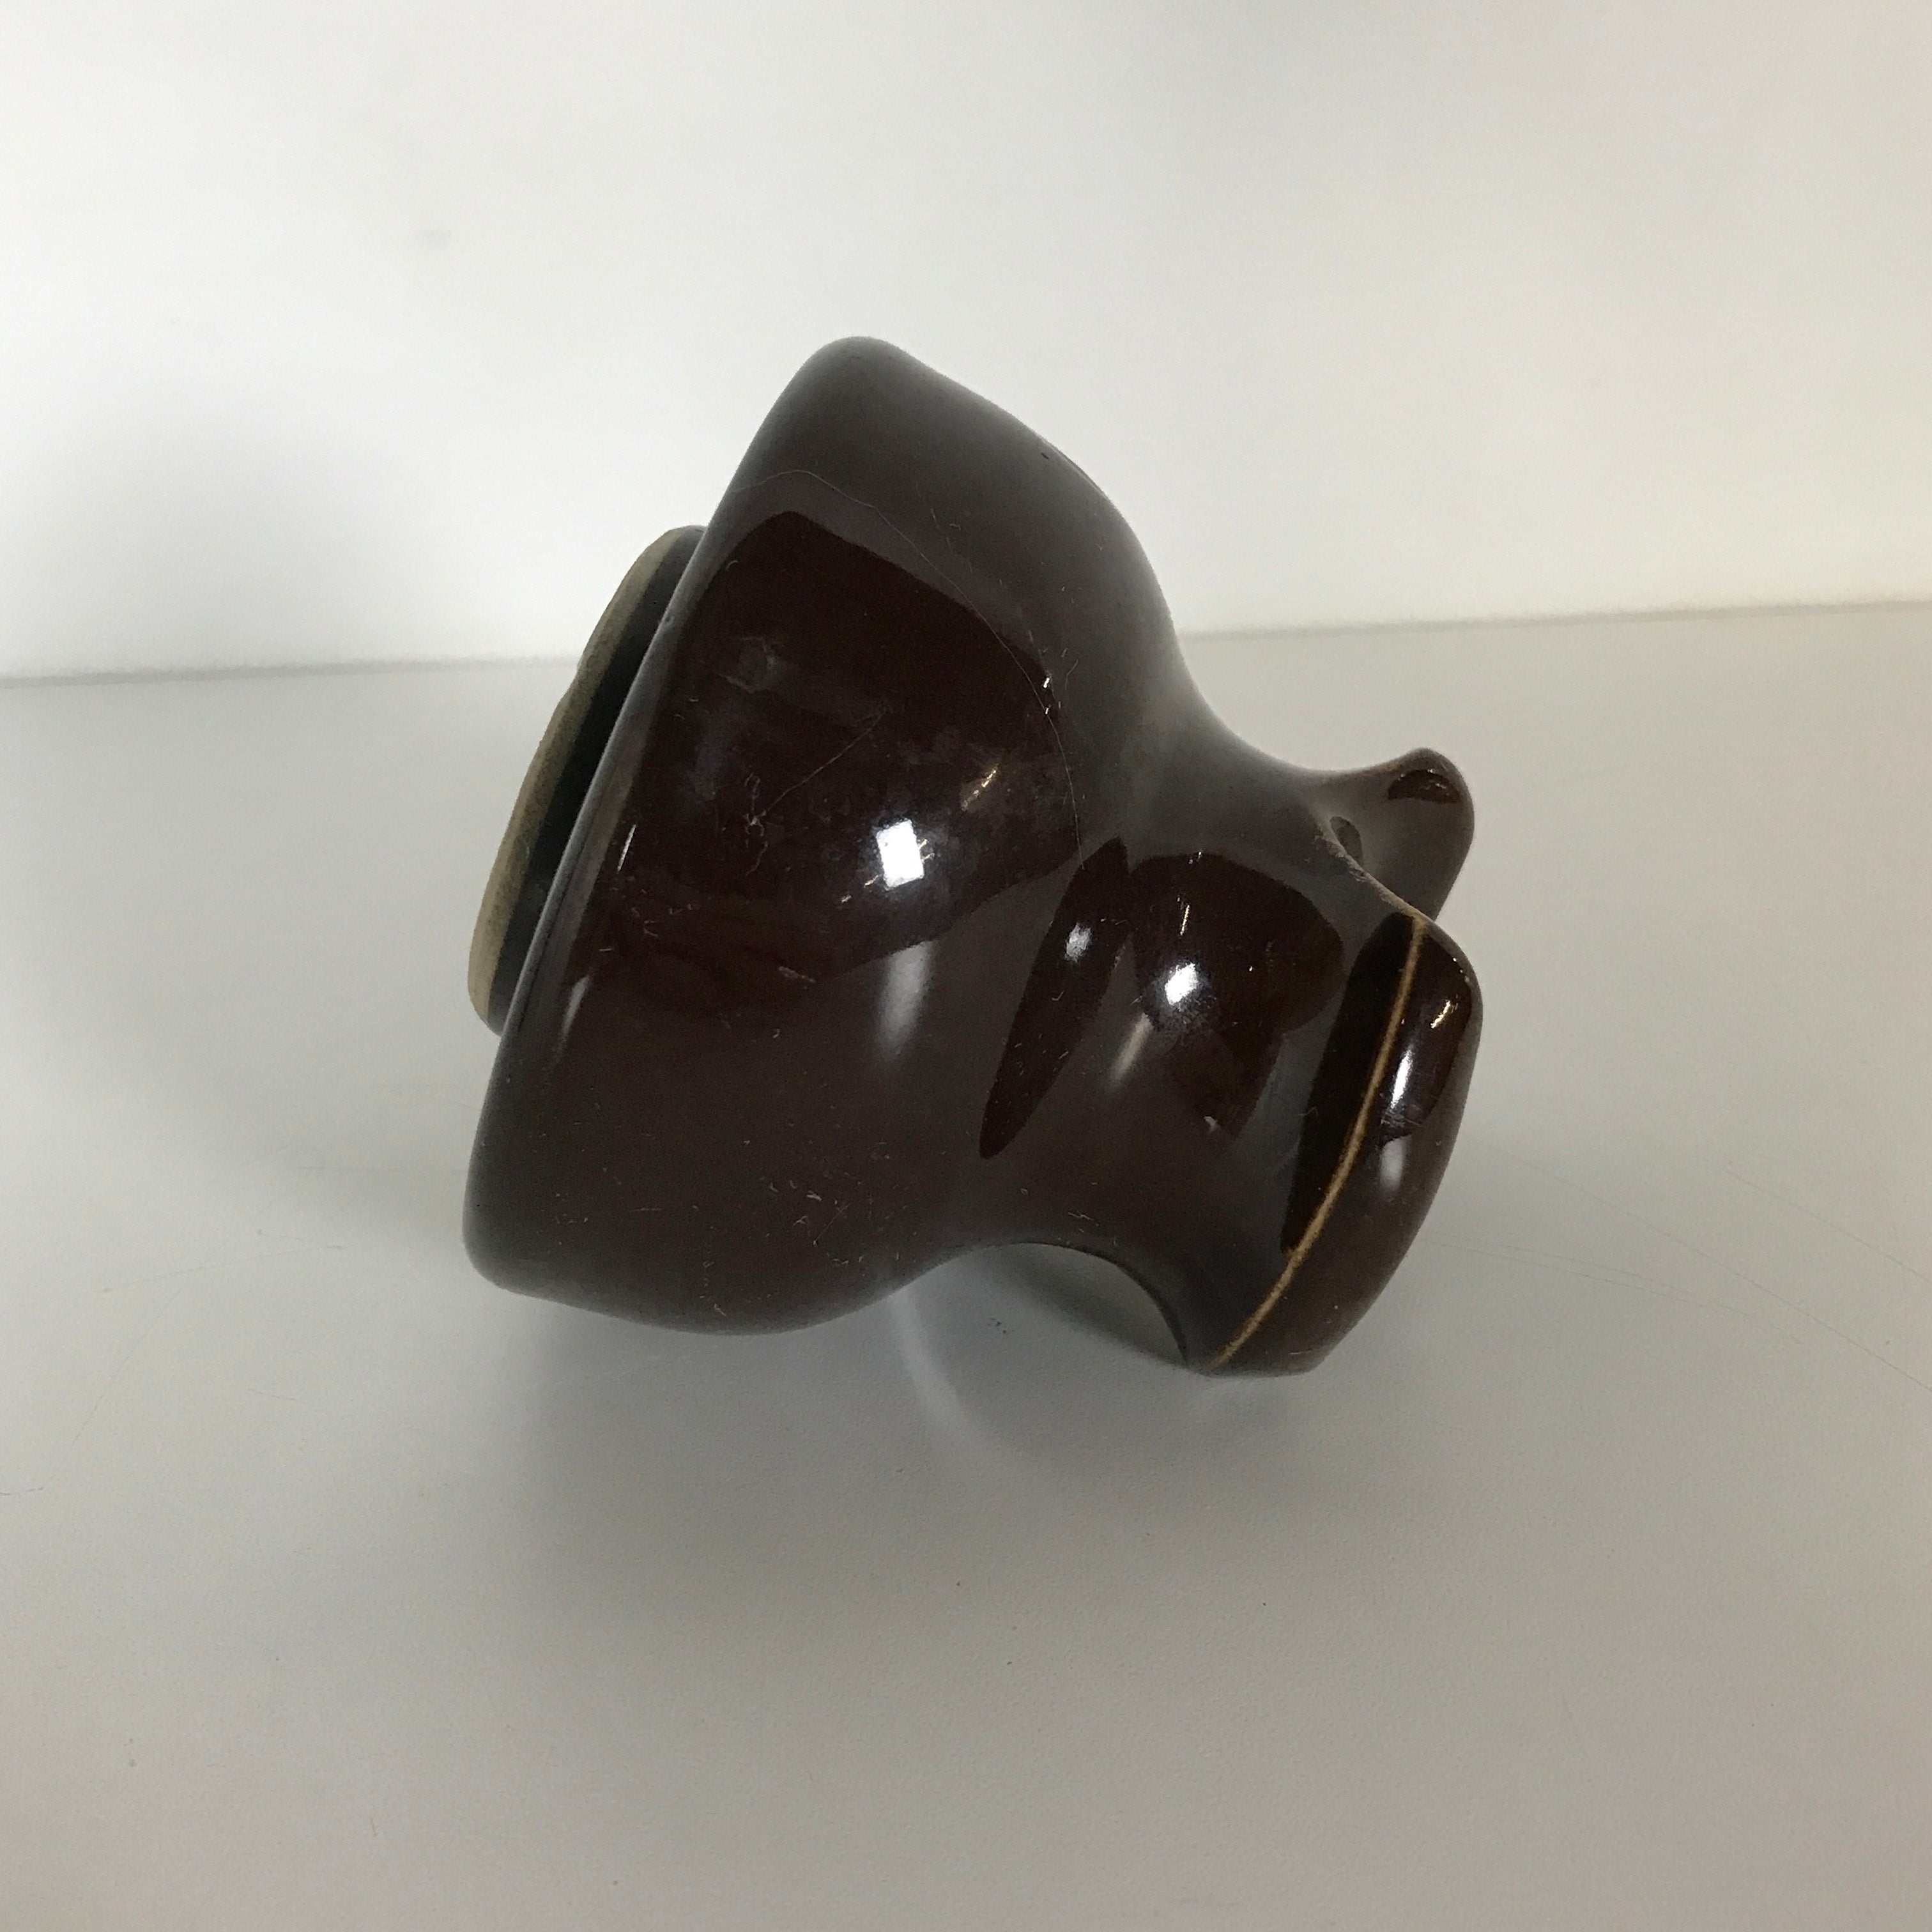 Antique Dark Brown 3.5" Tall Ceramic Insulator